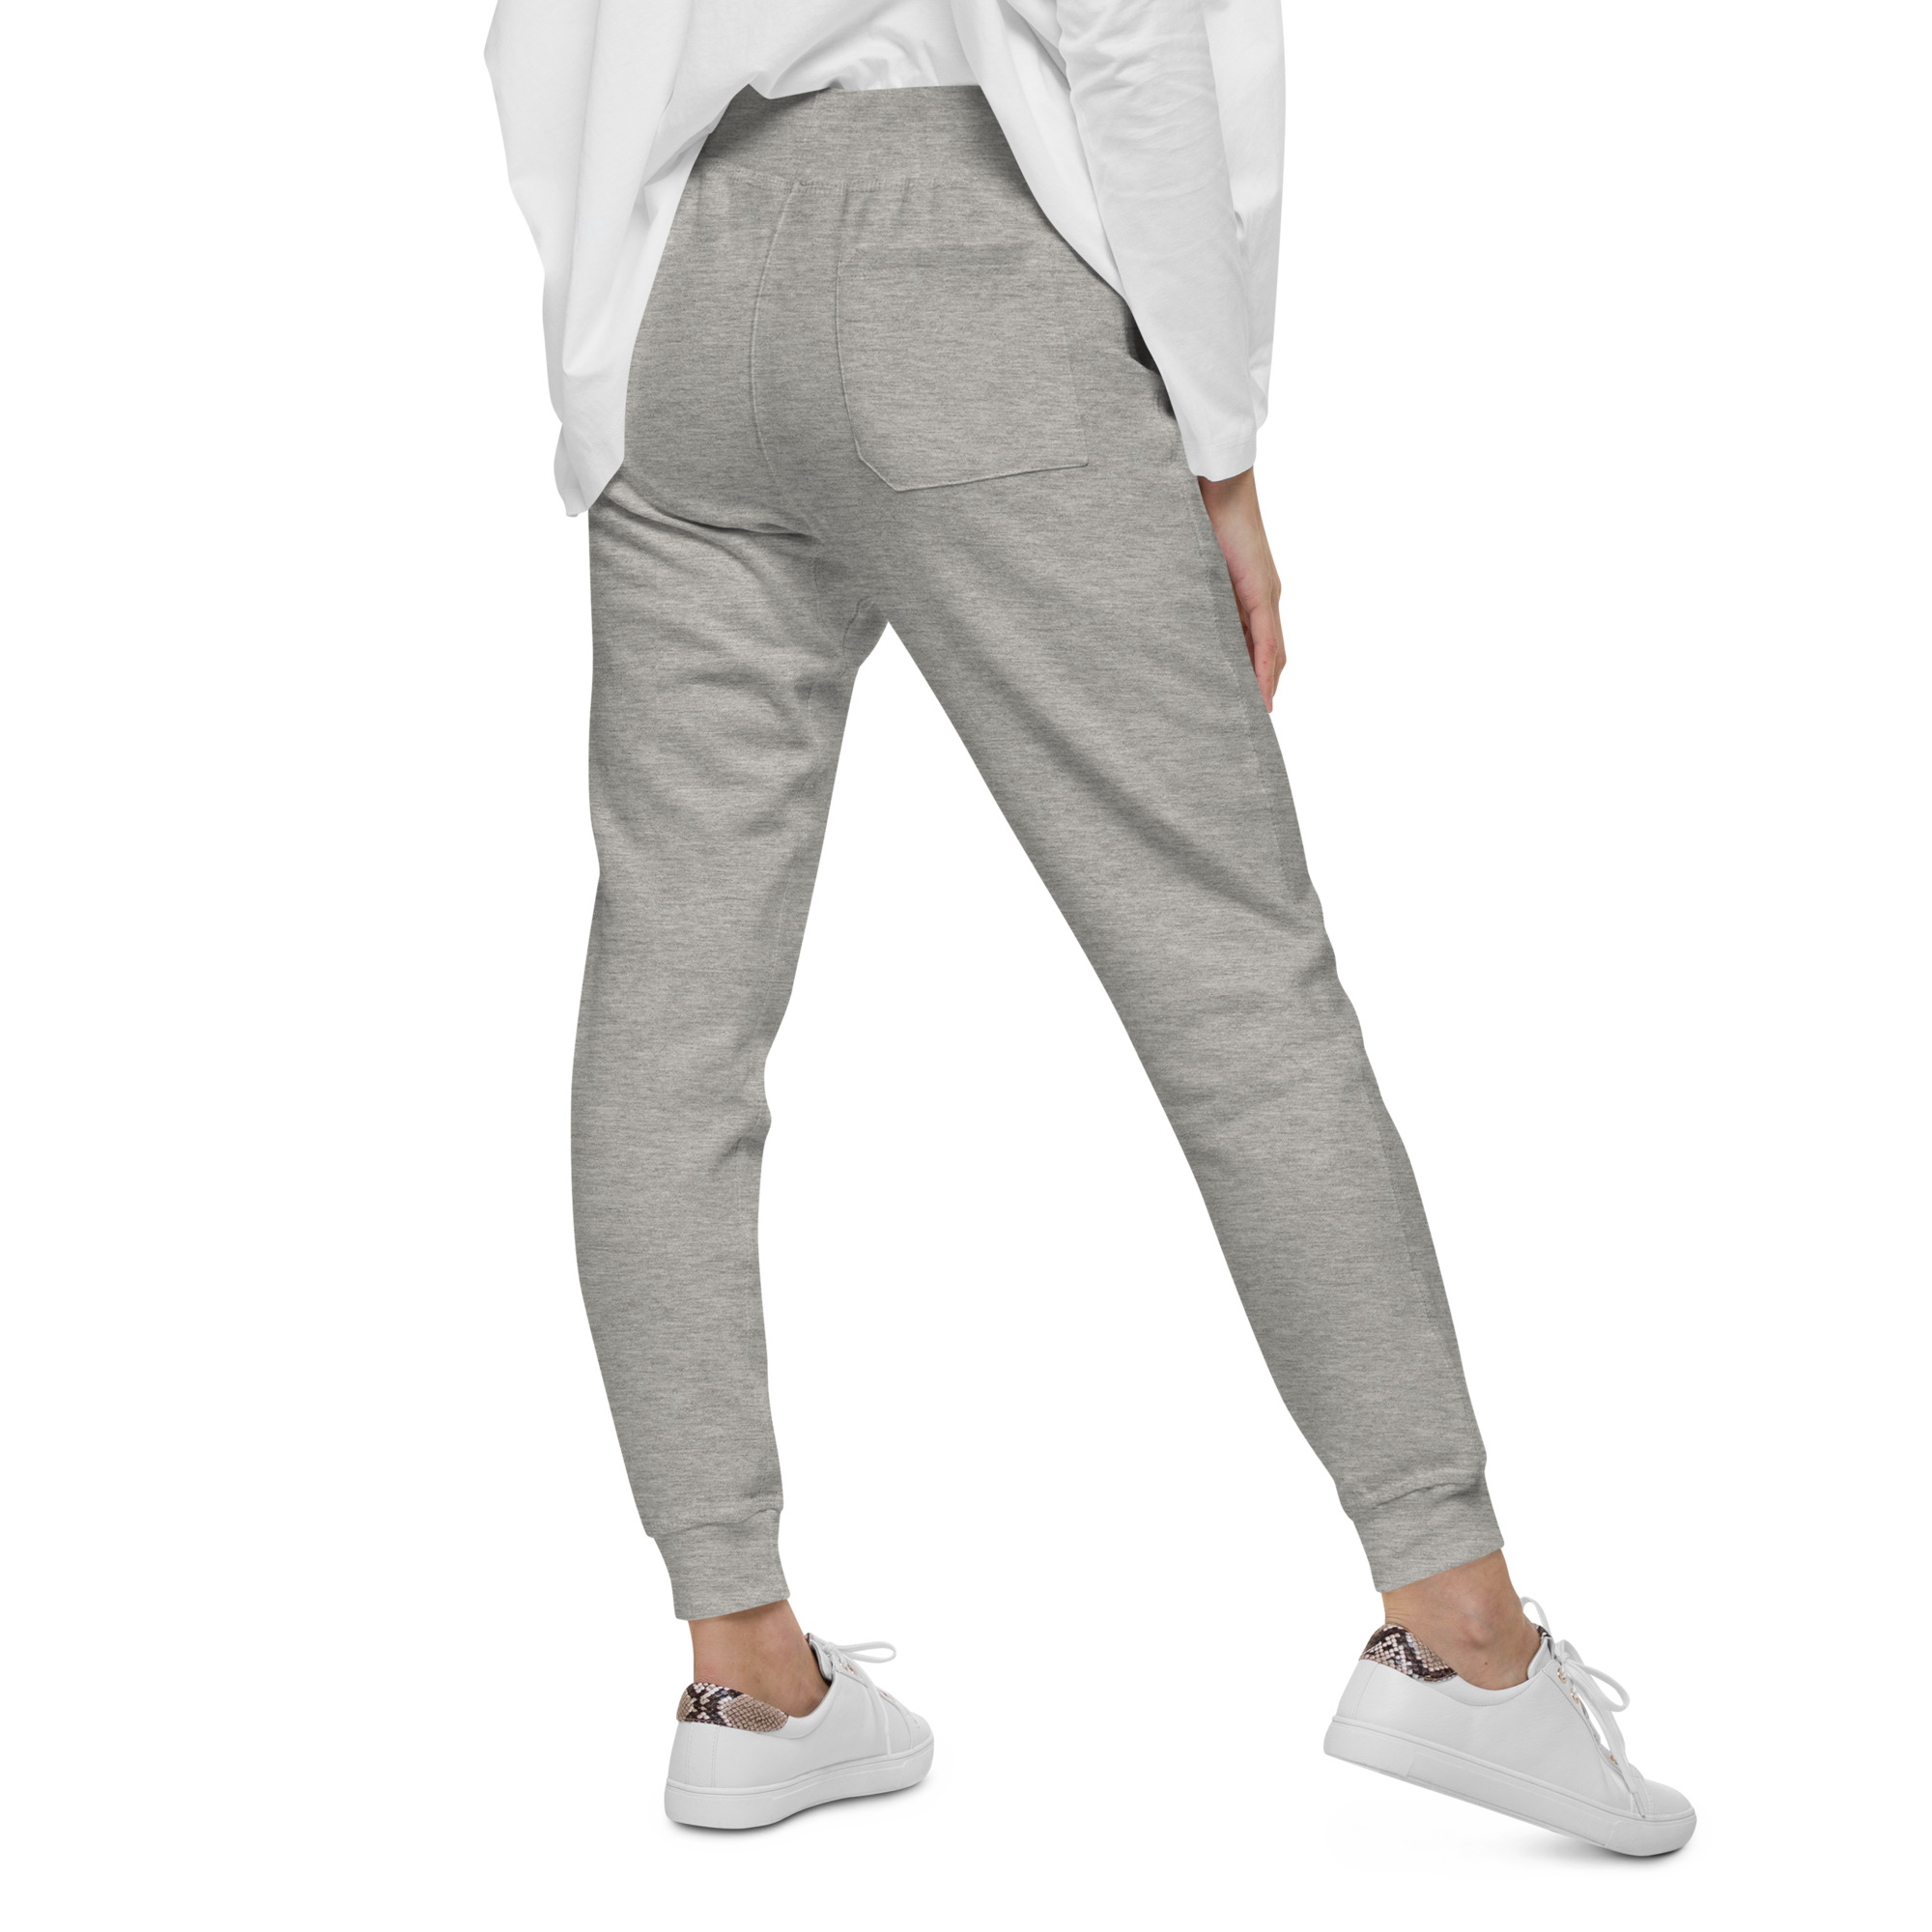 unisex-fleece-sweatpants-carbon-grey-back-654be9441600d-1.jpg